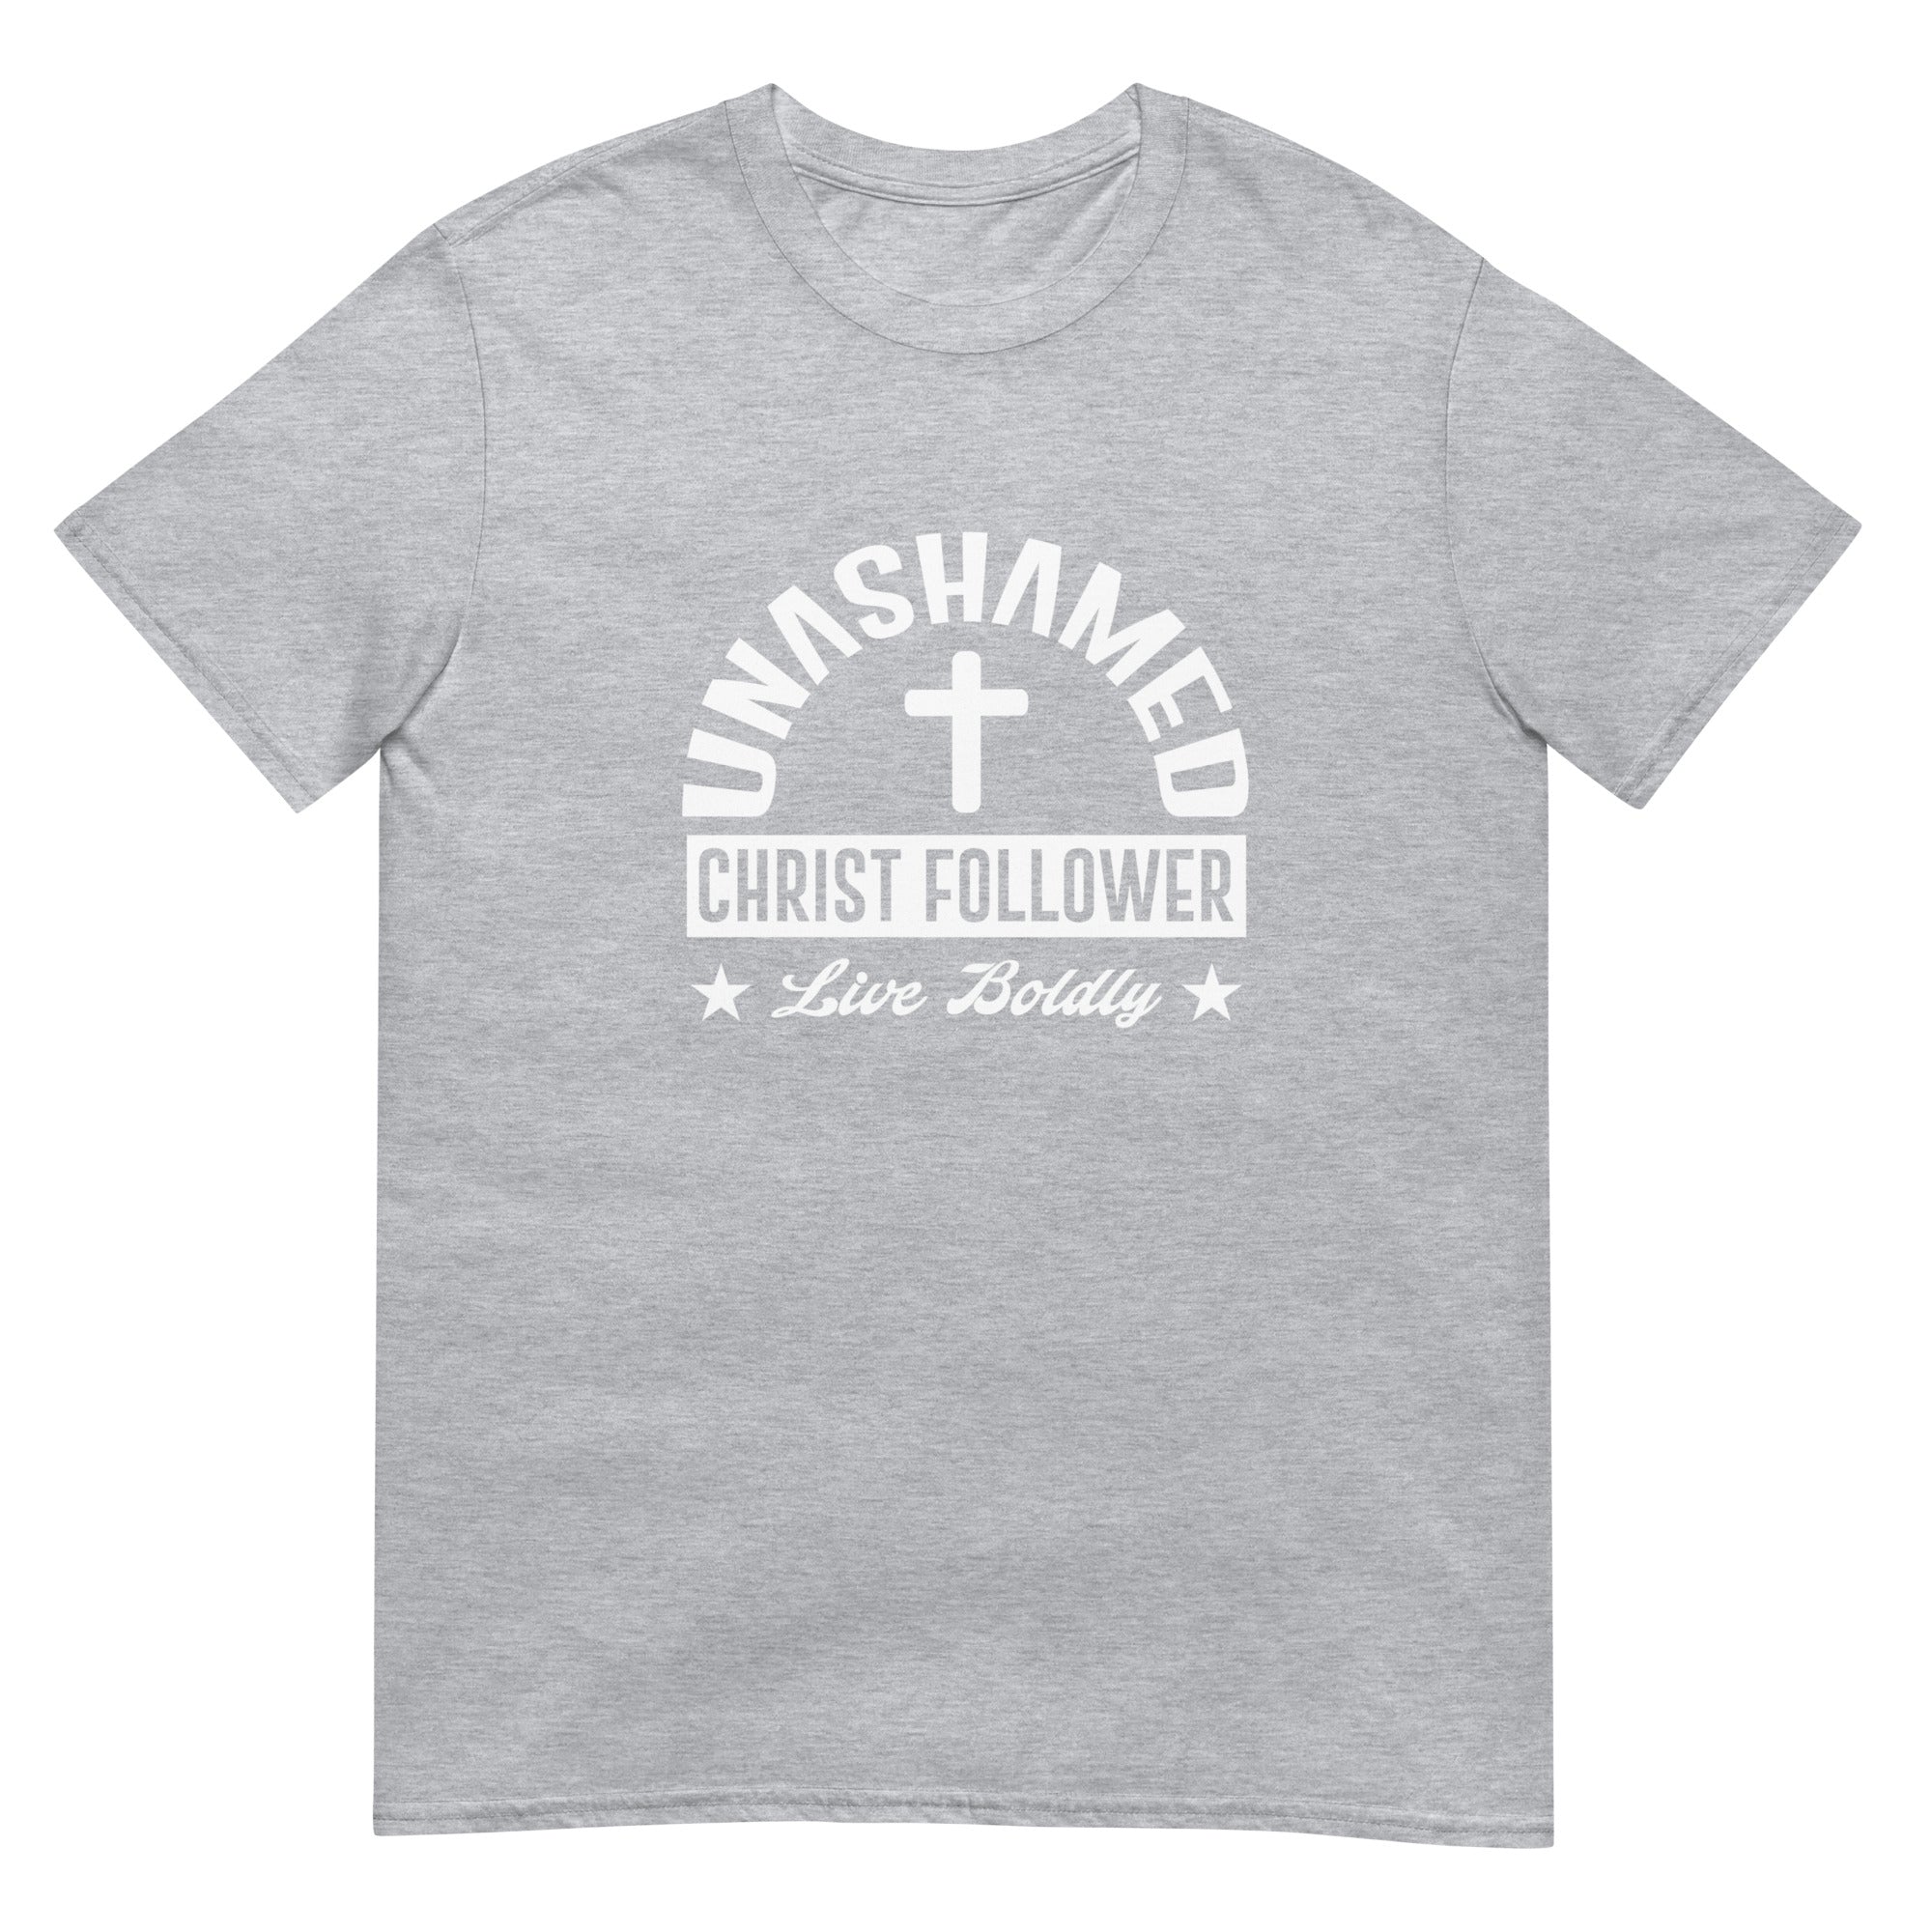 Unashamed Christ Follower Short-Sleeve Unisex T-Shirt